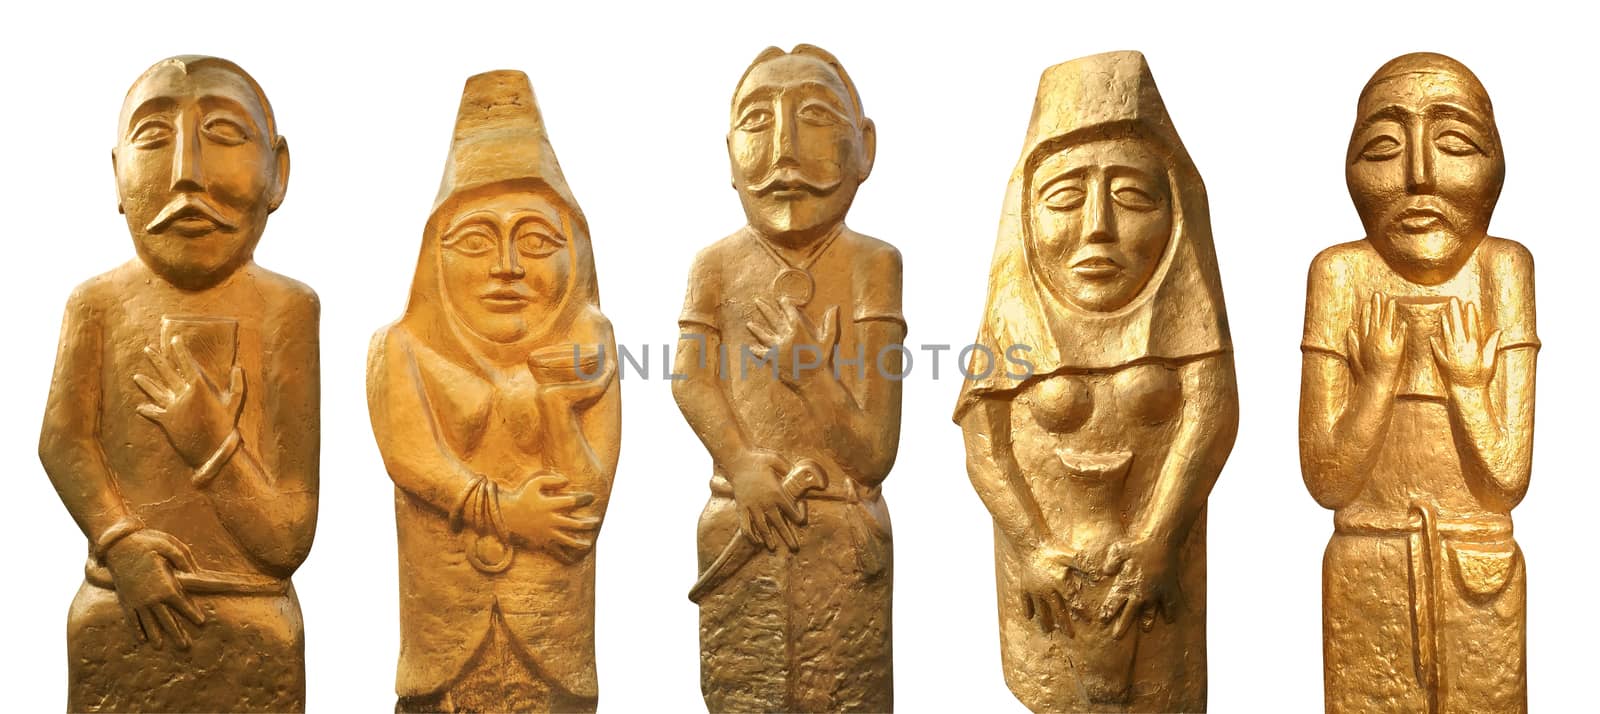 Gold statues of Kazakh people by Venakr